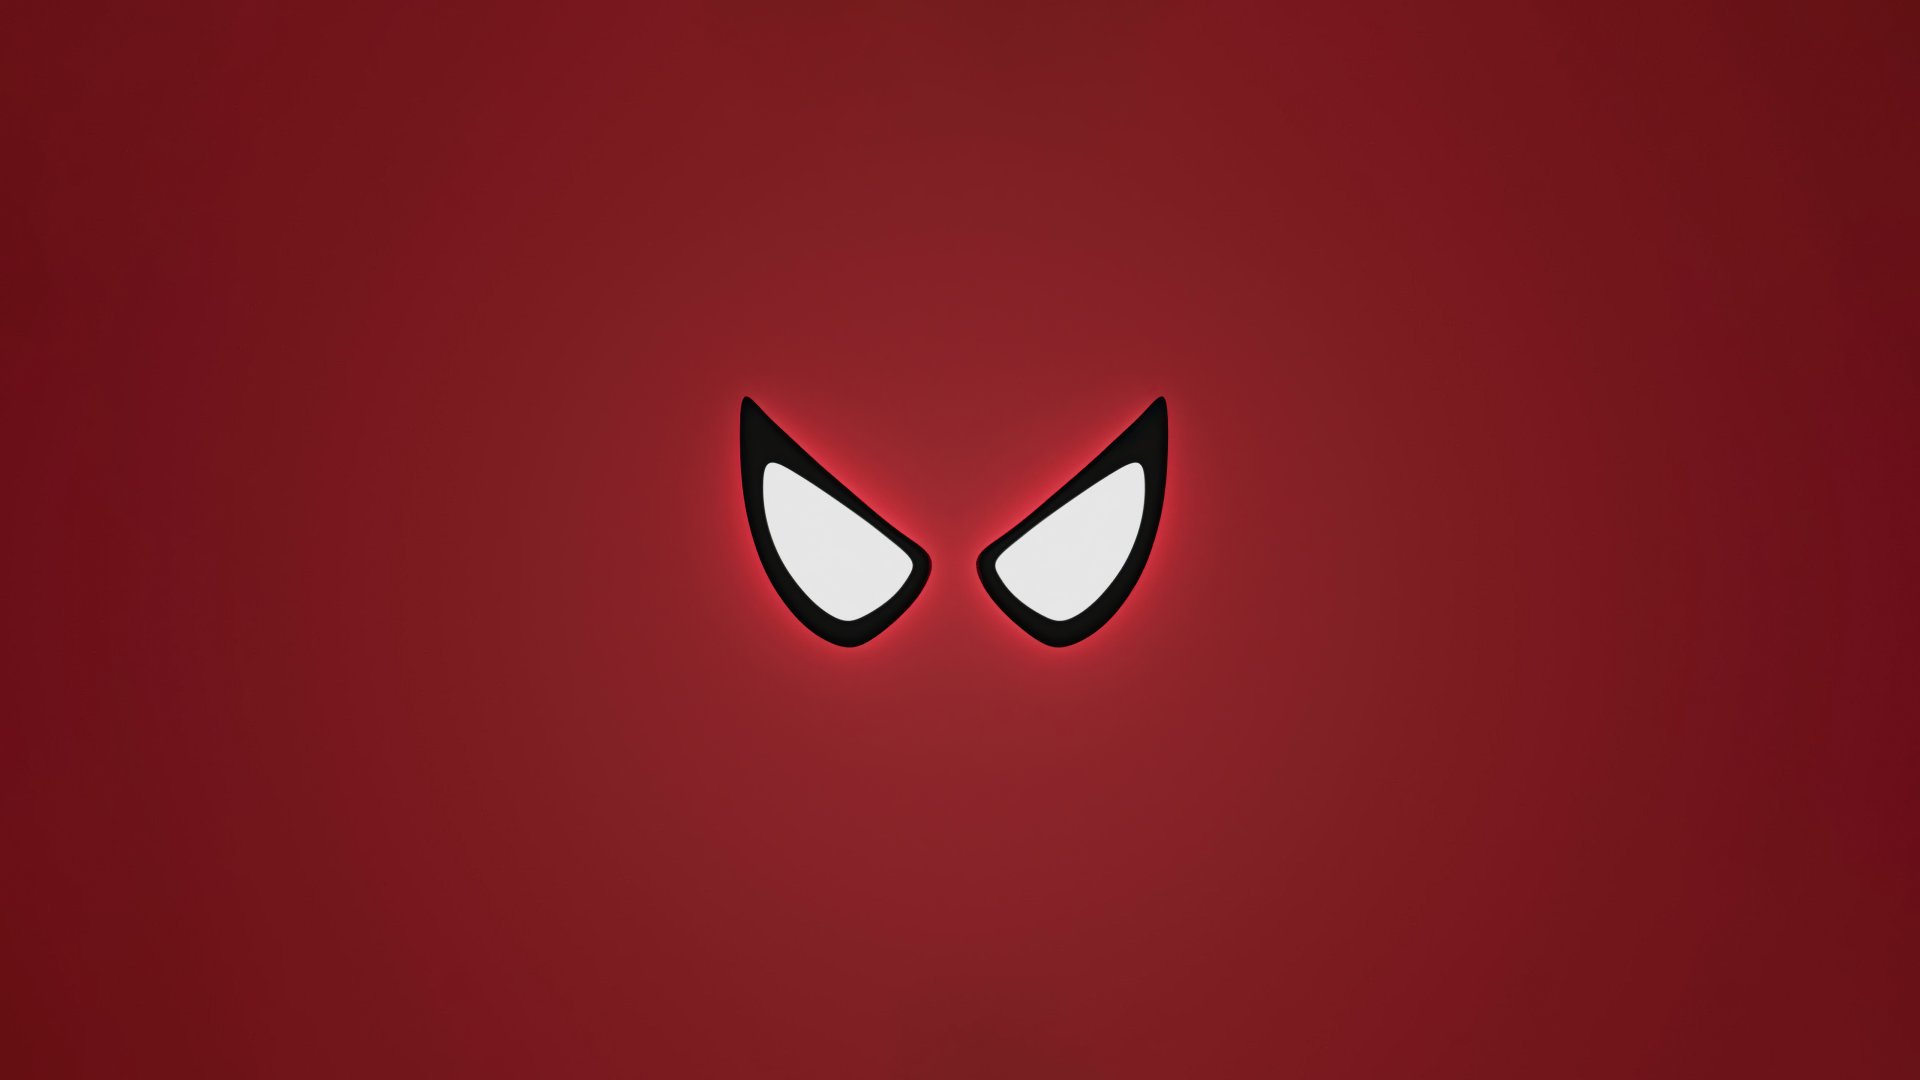 Spider Man eyes Wallpaper 5k Ultra HD ID:8891